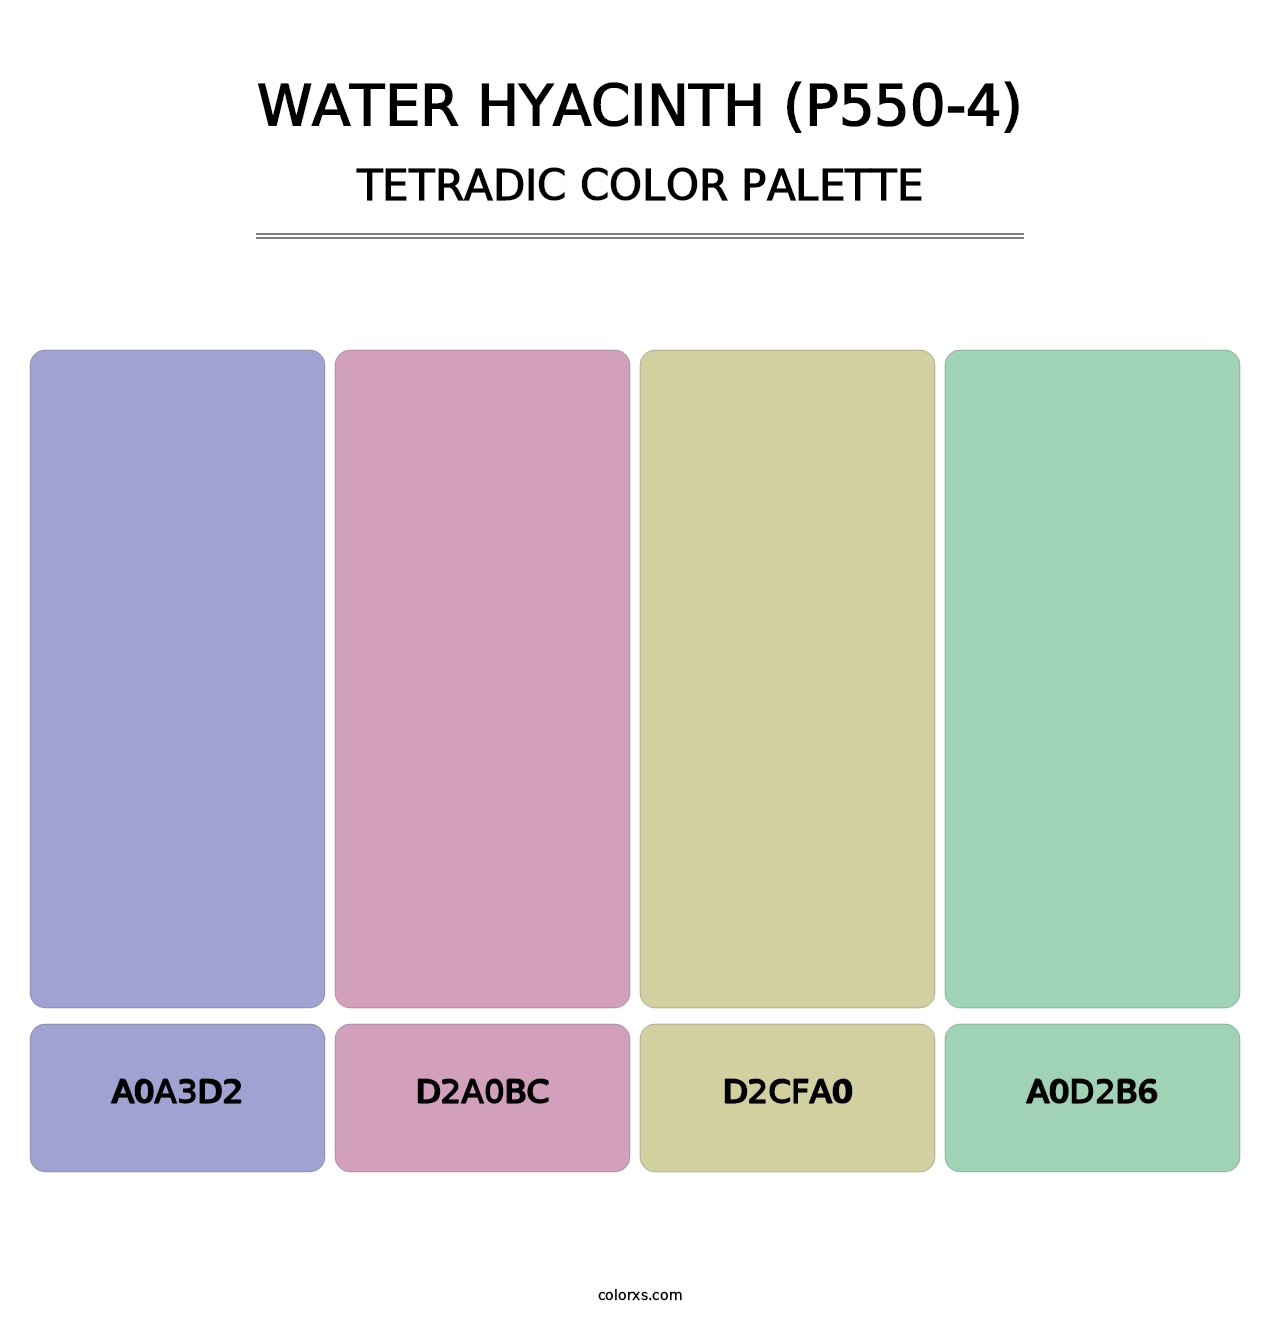 Water Hyacinth (P550-4) - Tetradic Color Palette